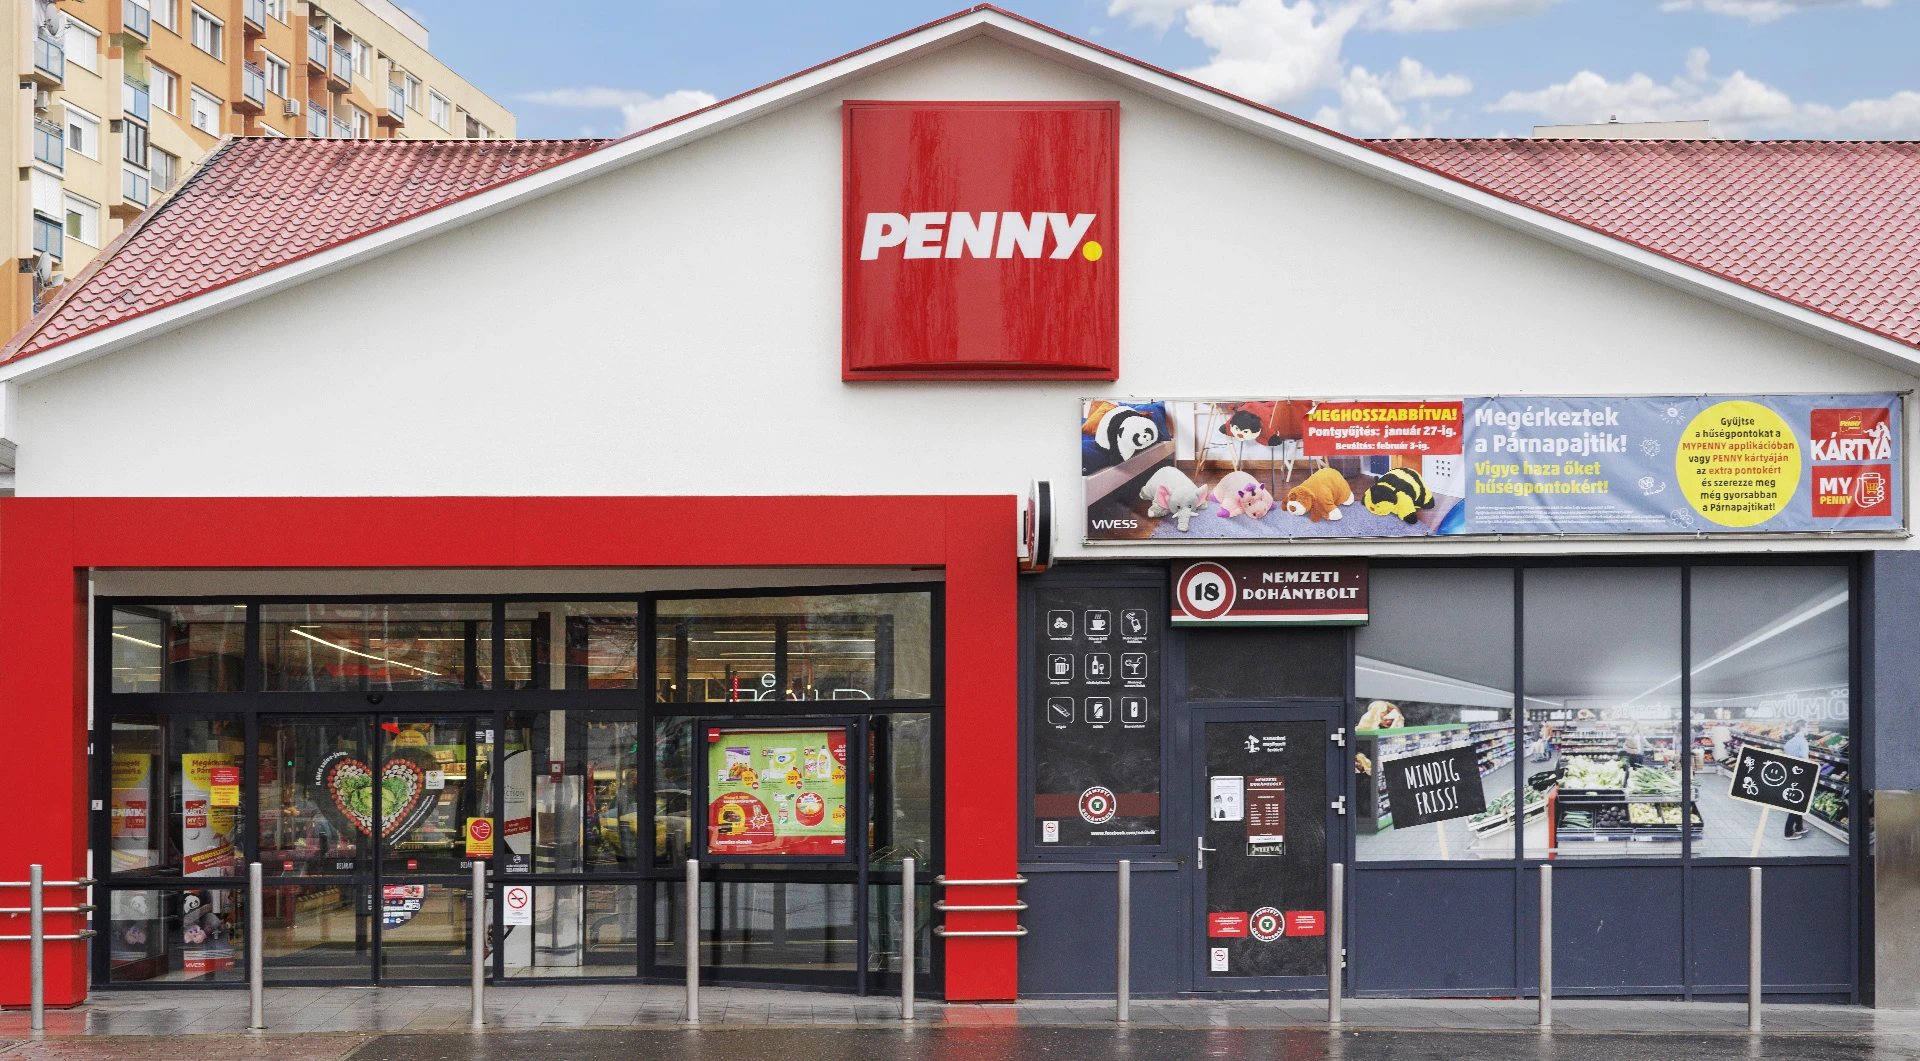 Exterior of an international supermarket, Penny